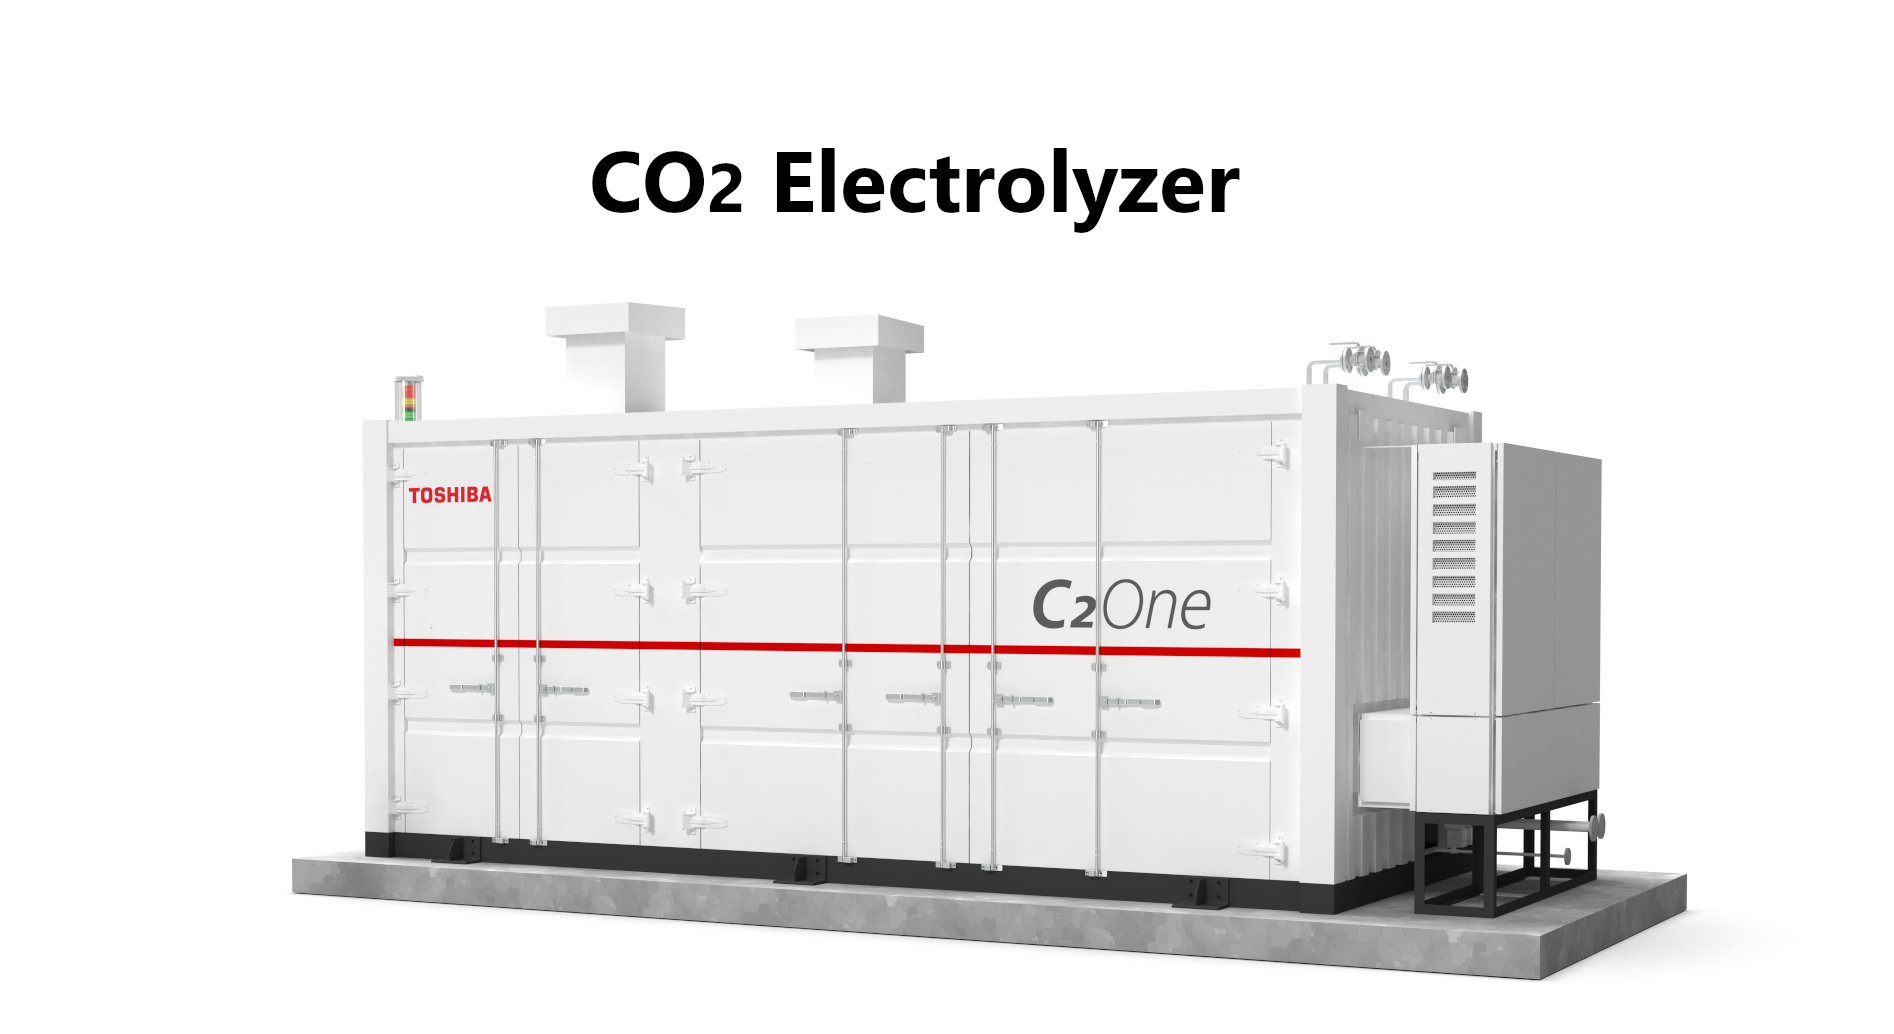 CO2 electrolyzer